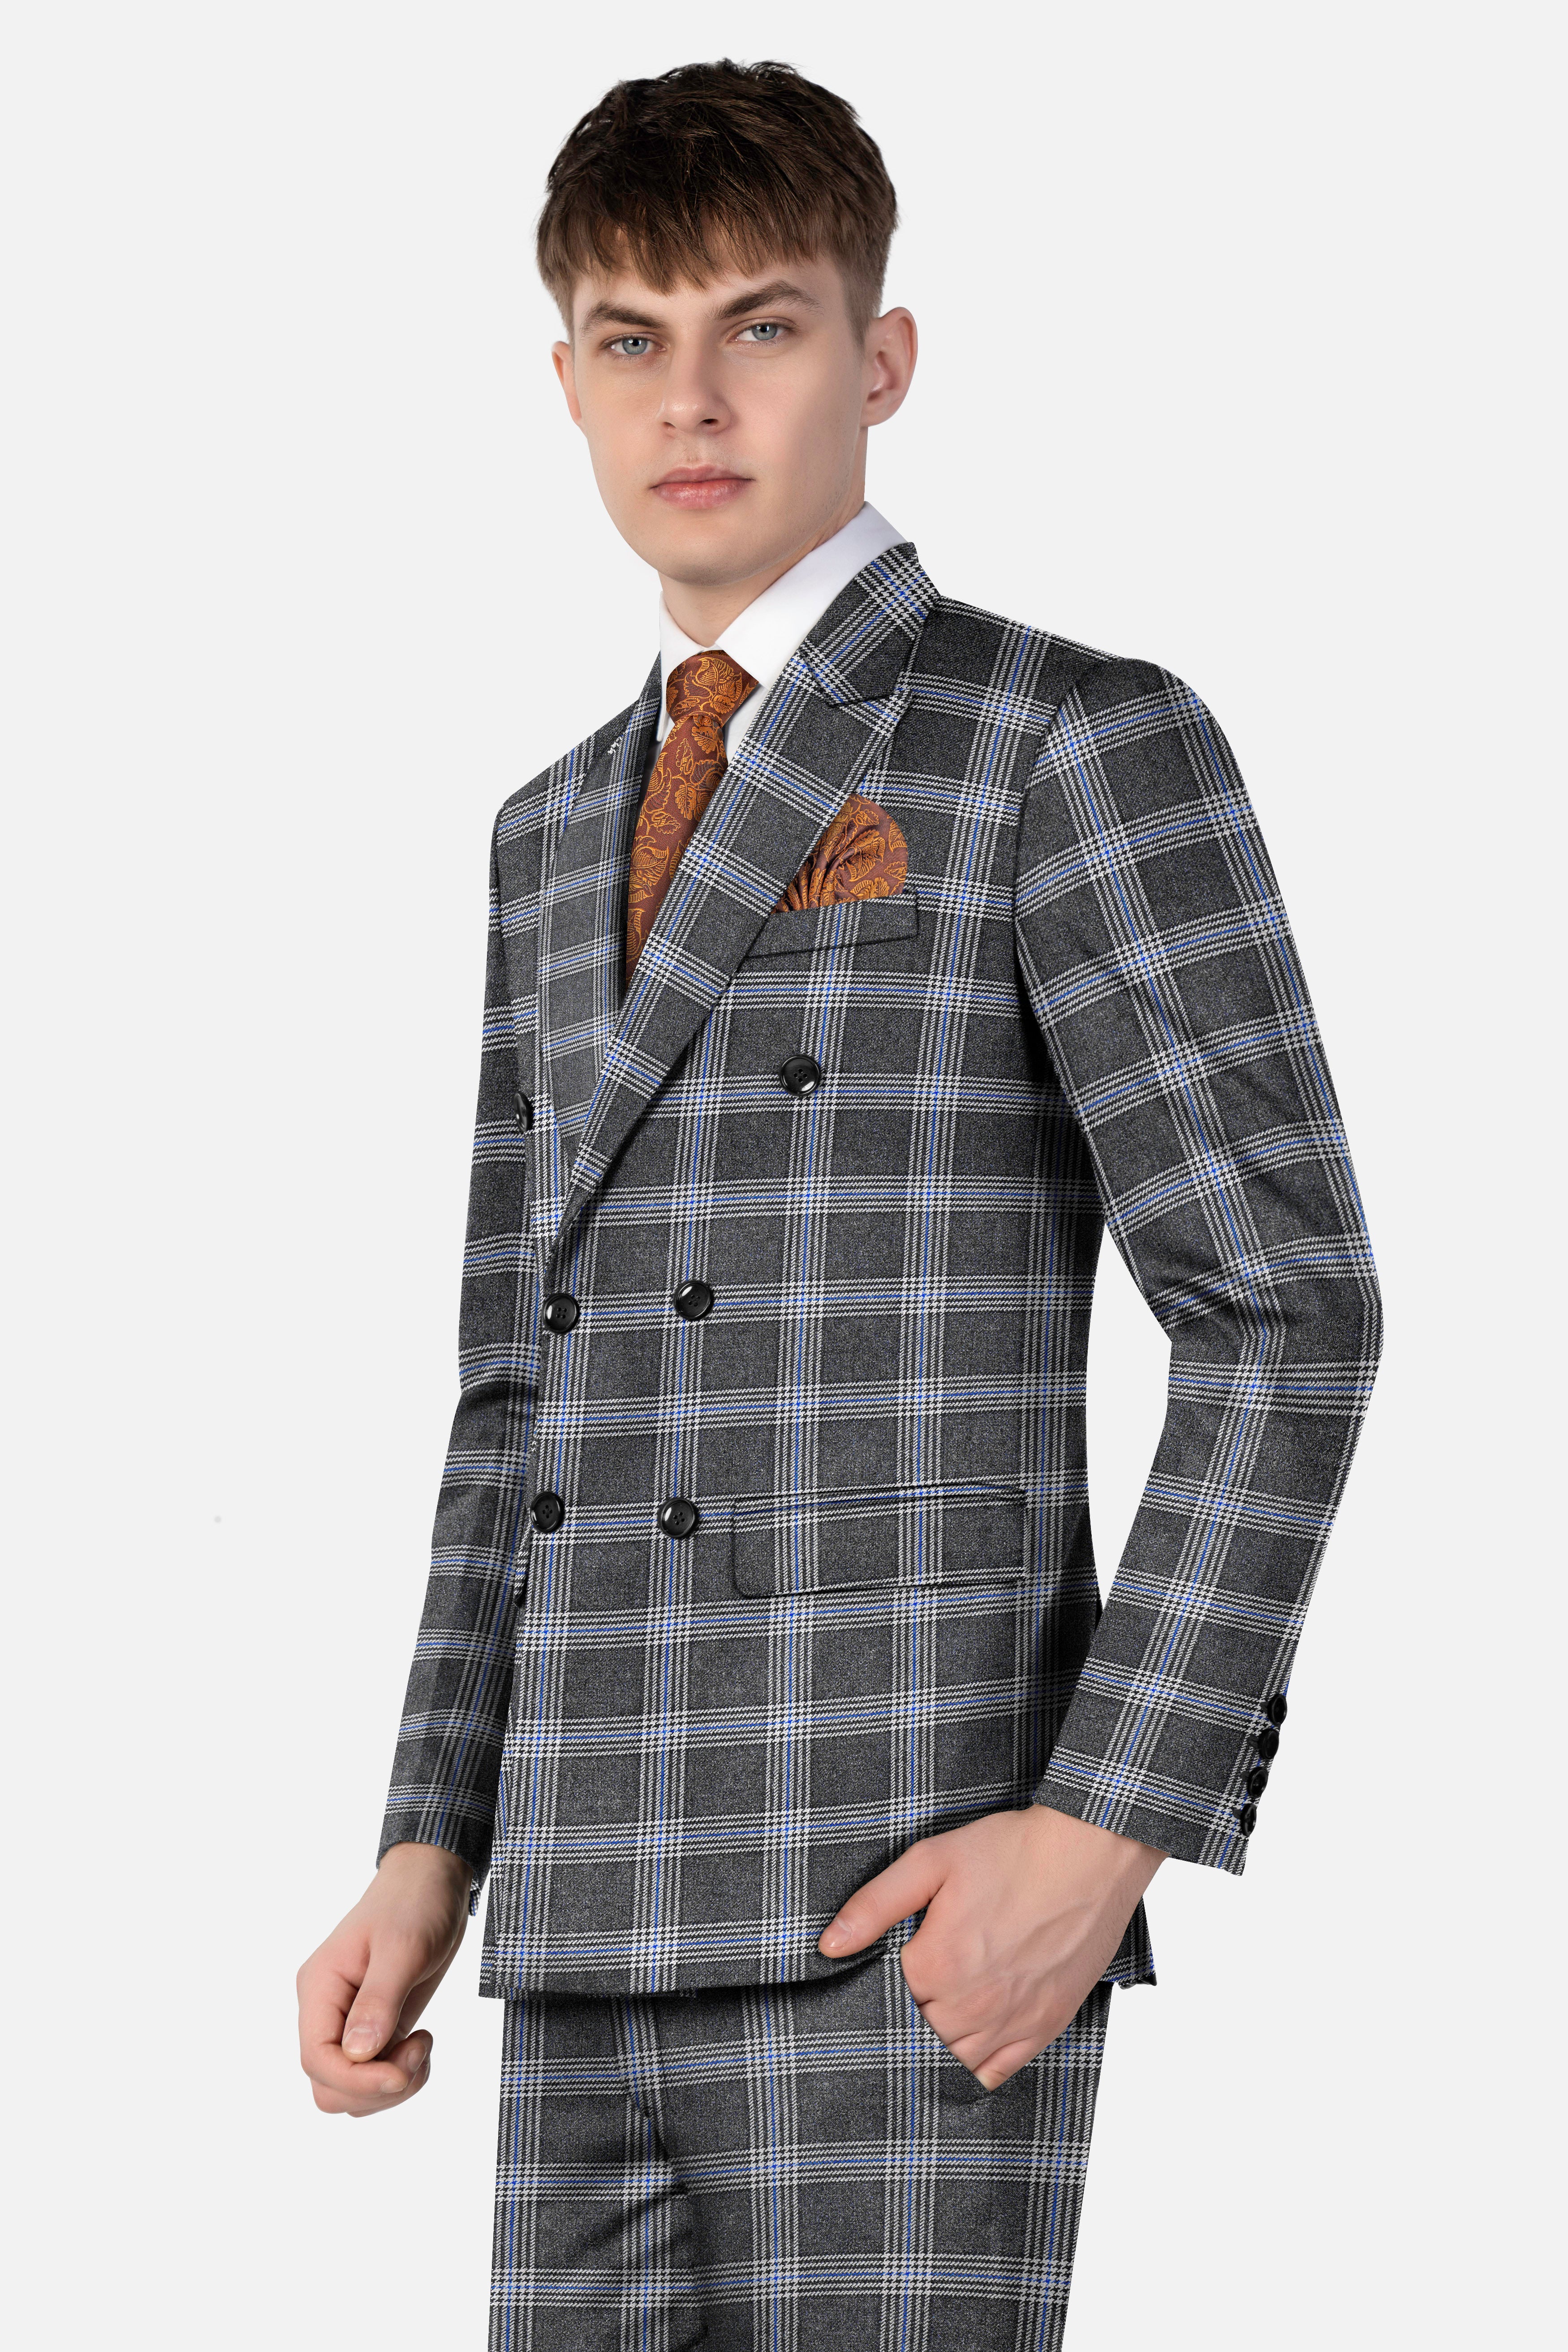 Iridium Gray Plaid Tweed Double Breasted Suit